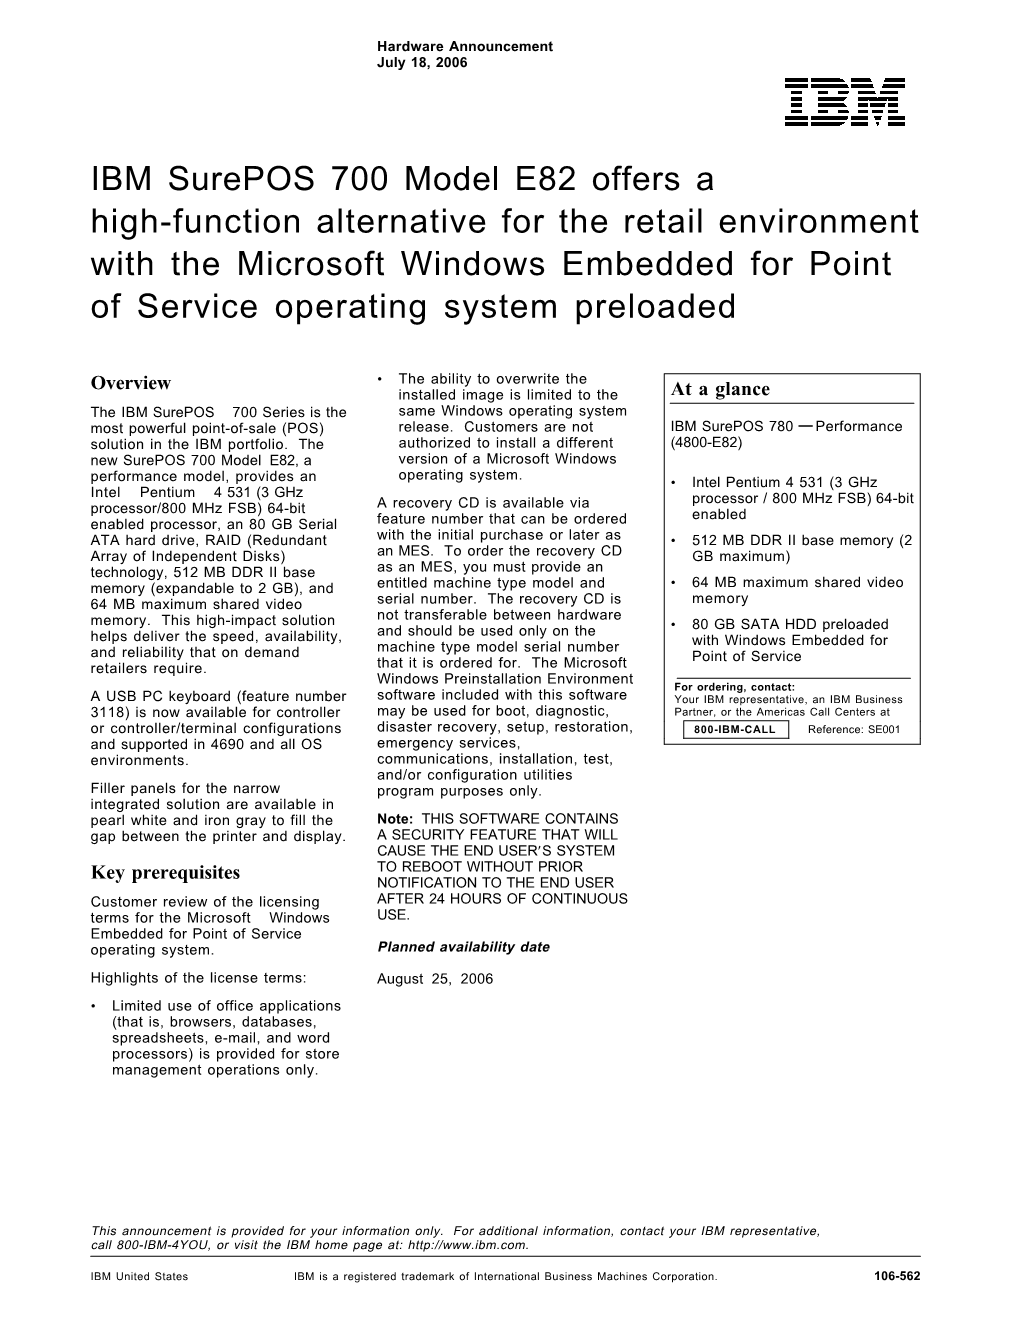 IBM Surepos 700 Model E82 Offers a High-Function Alternative for The